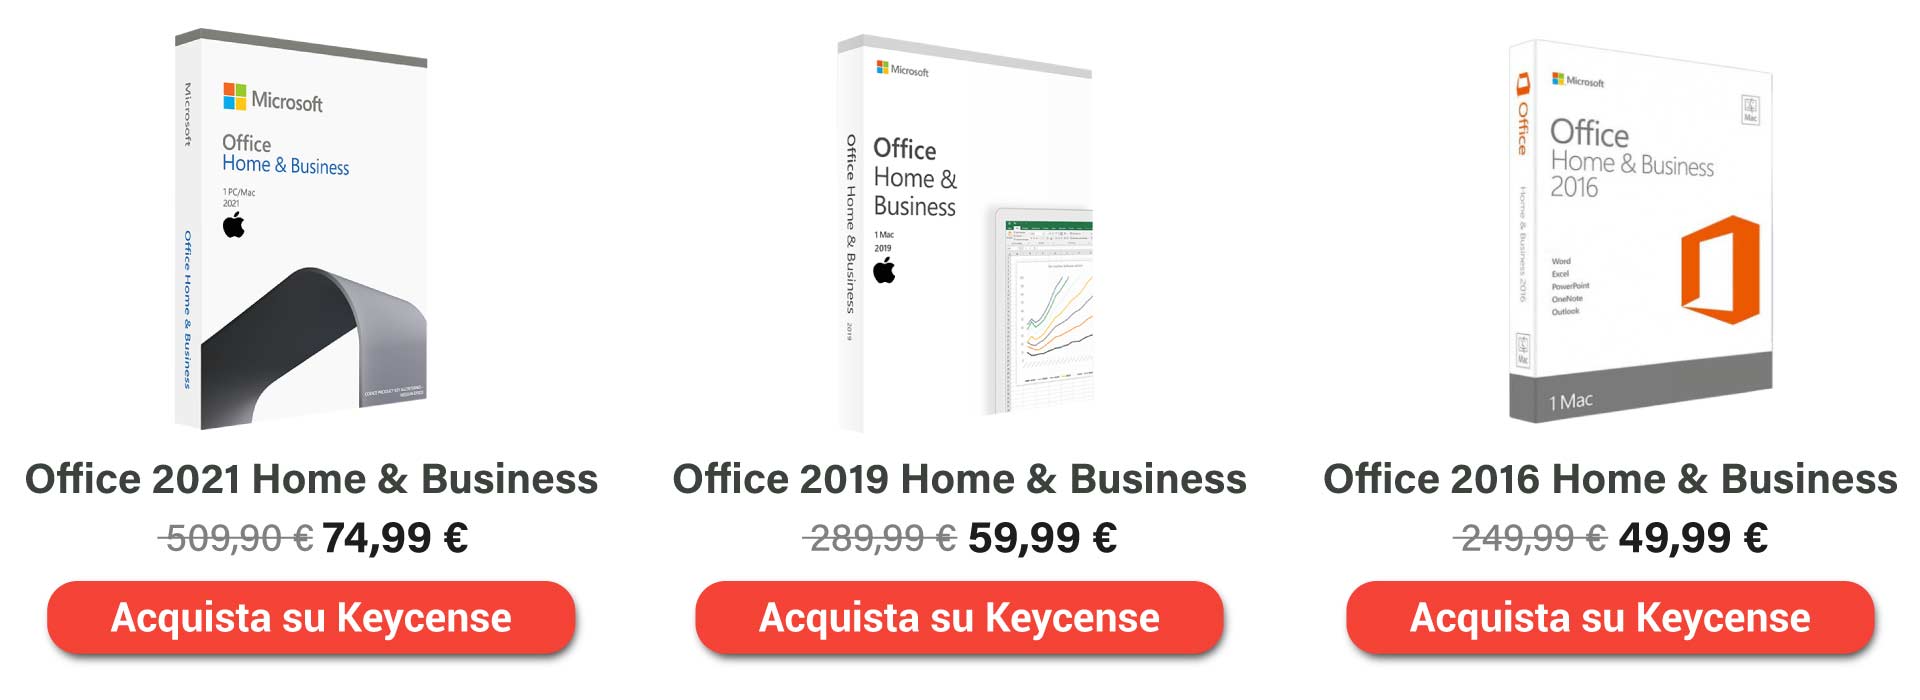 Pacchetti Office per Mac su Keycense